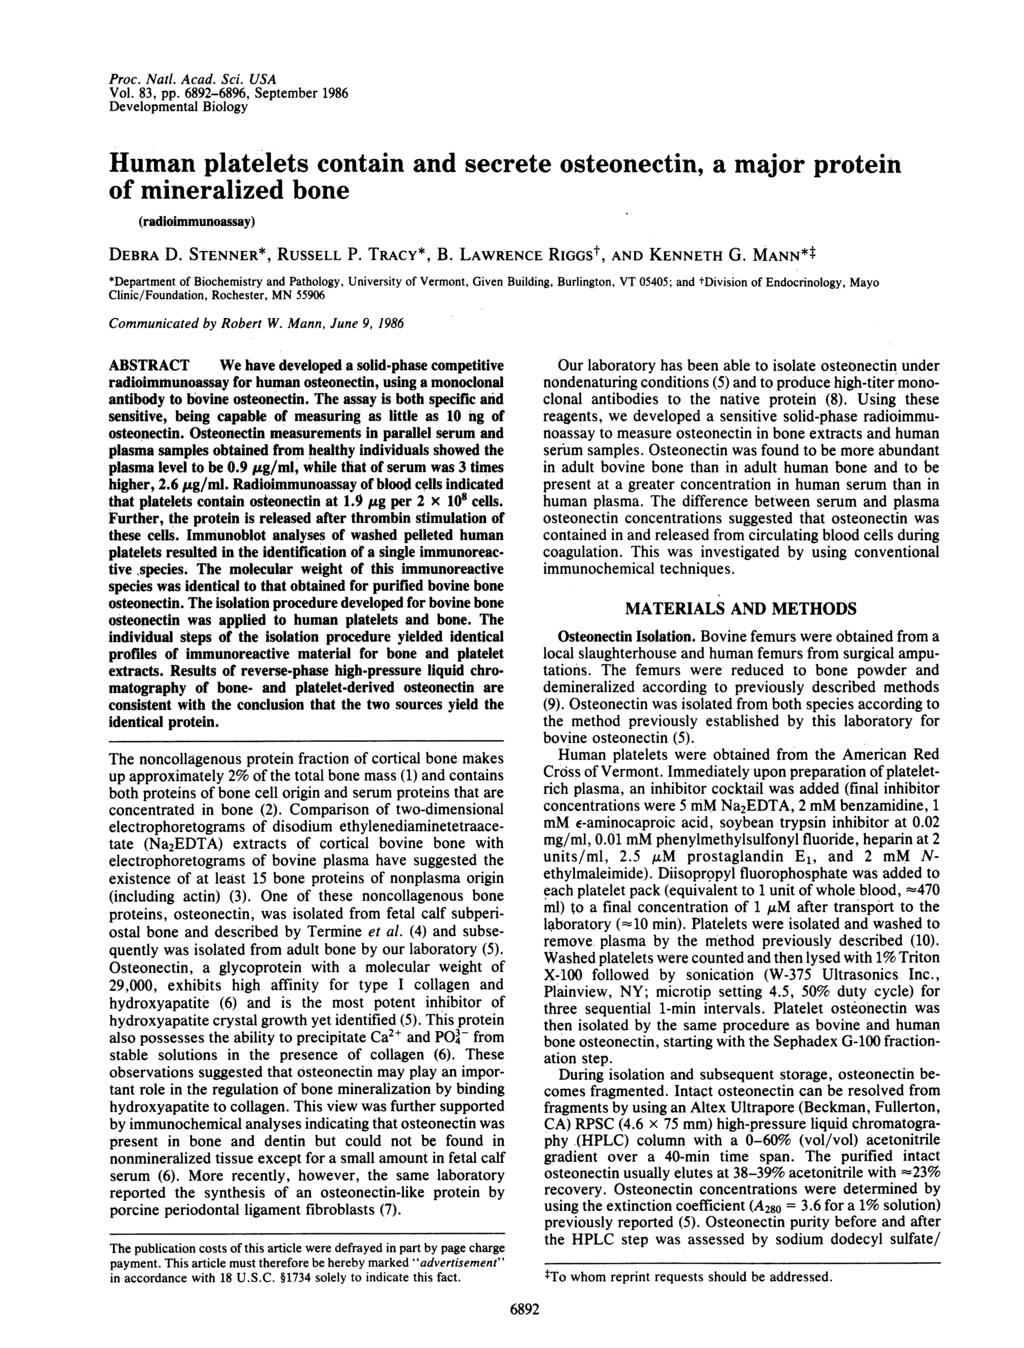 Proc. Nati. Acad. Sci. USA Vol. 83, pp. 6892-6896, September 1986 Developmental Biology Human platelets contain and secrete osteonectin, a major protein of mineralized bone (radioimmunoassay) DEBRA D.